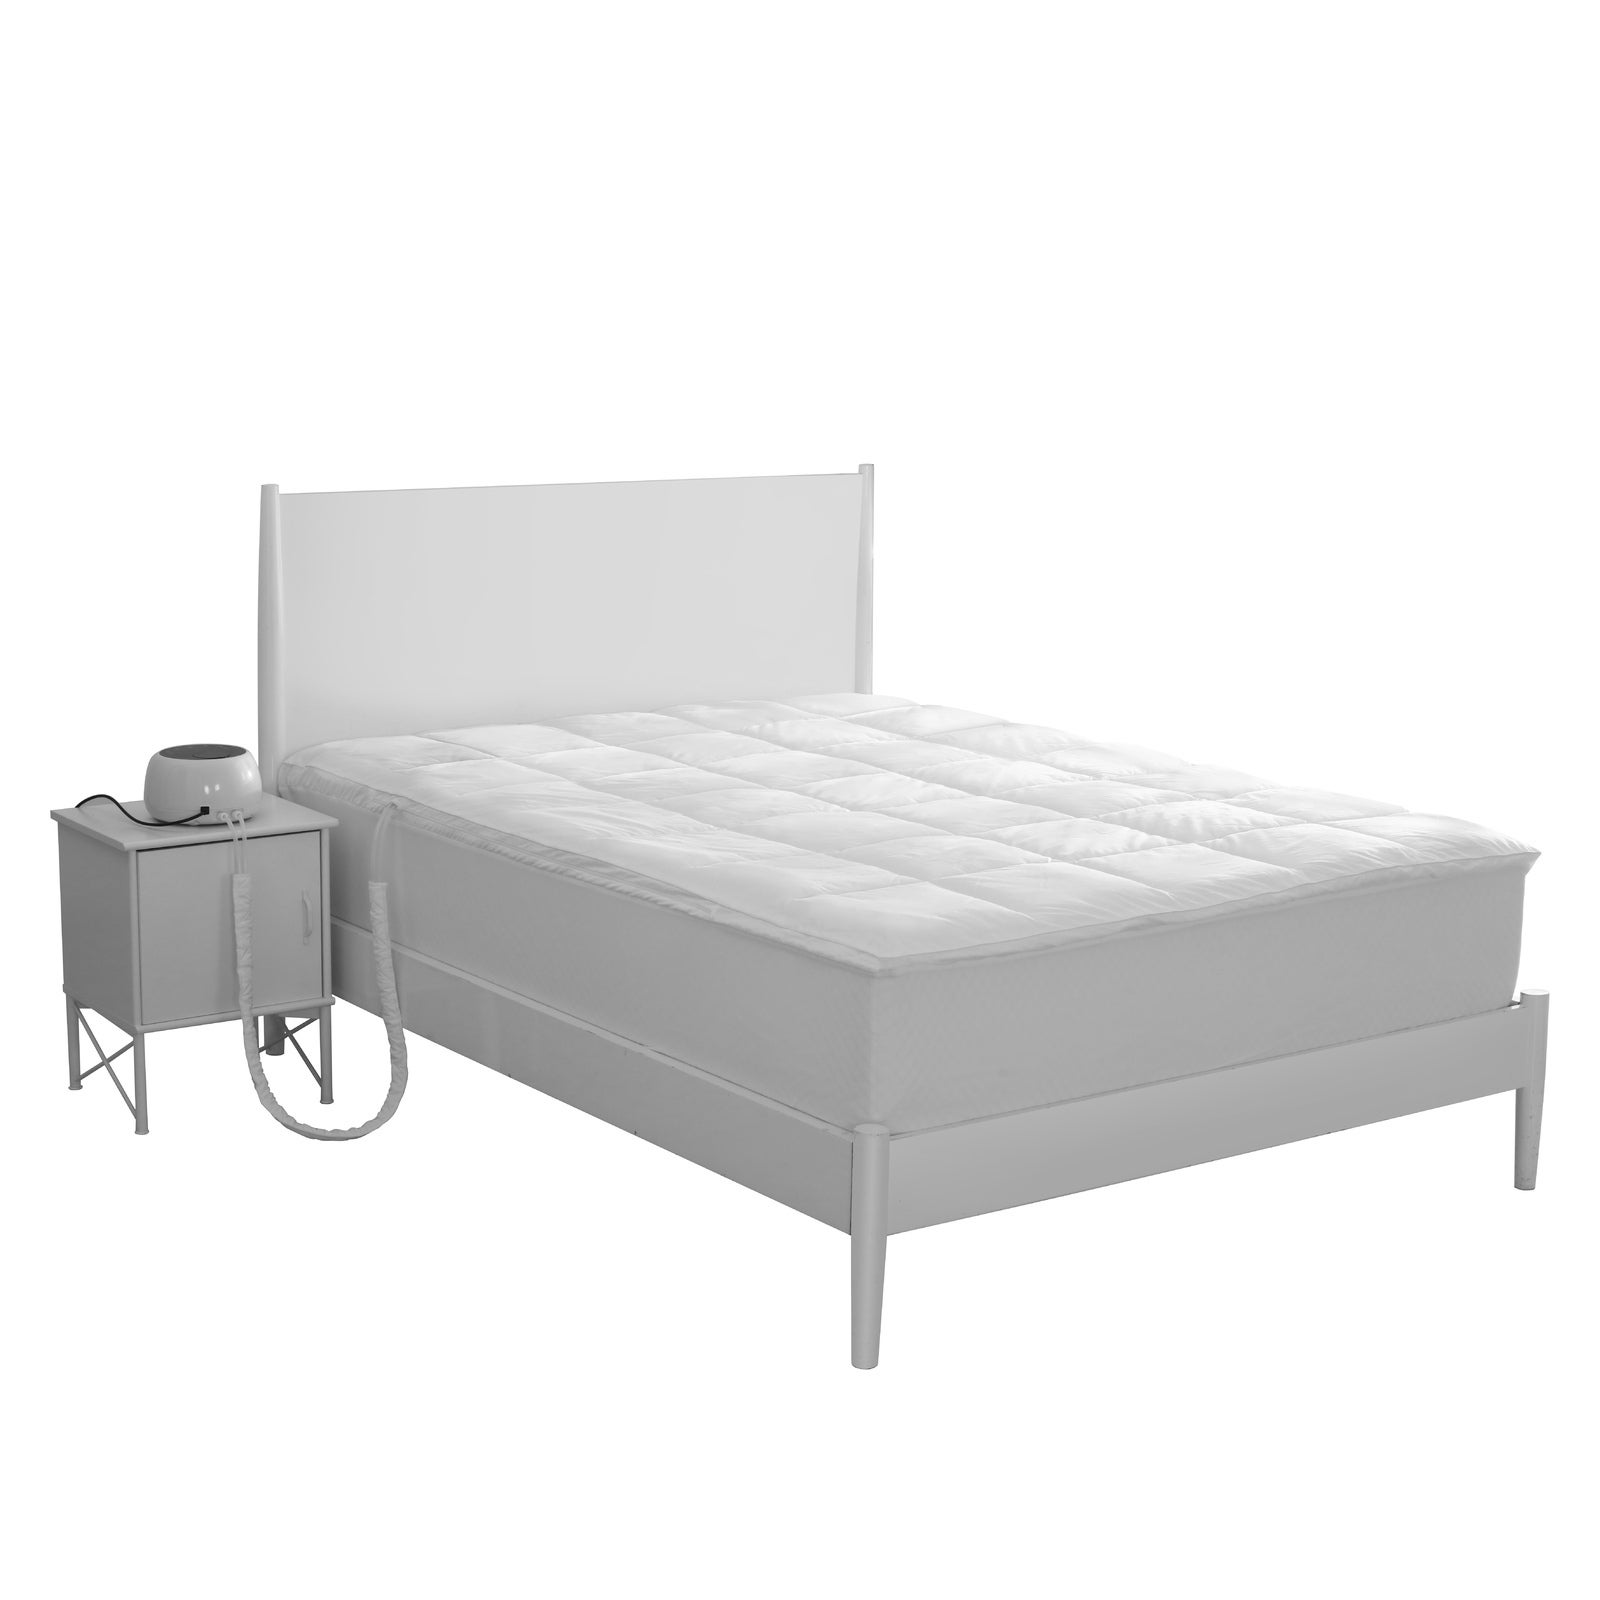 Dreamaker Hydroflow Hydronic Heating Blanket - King Bed